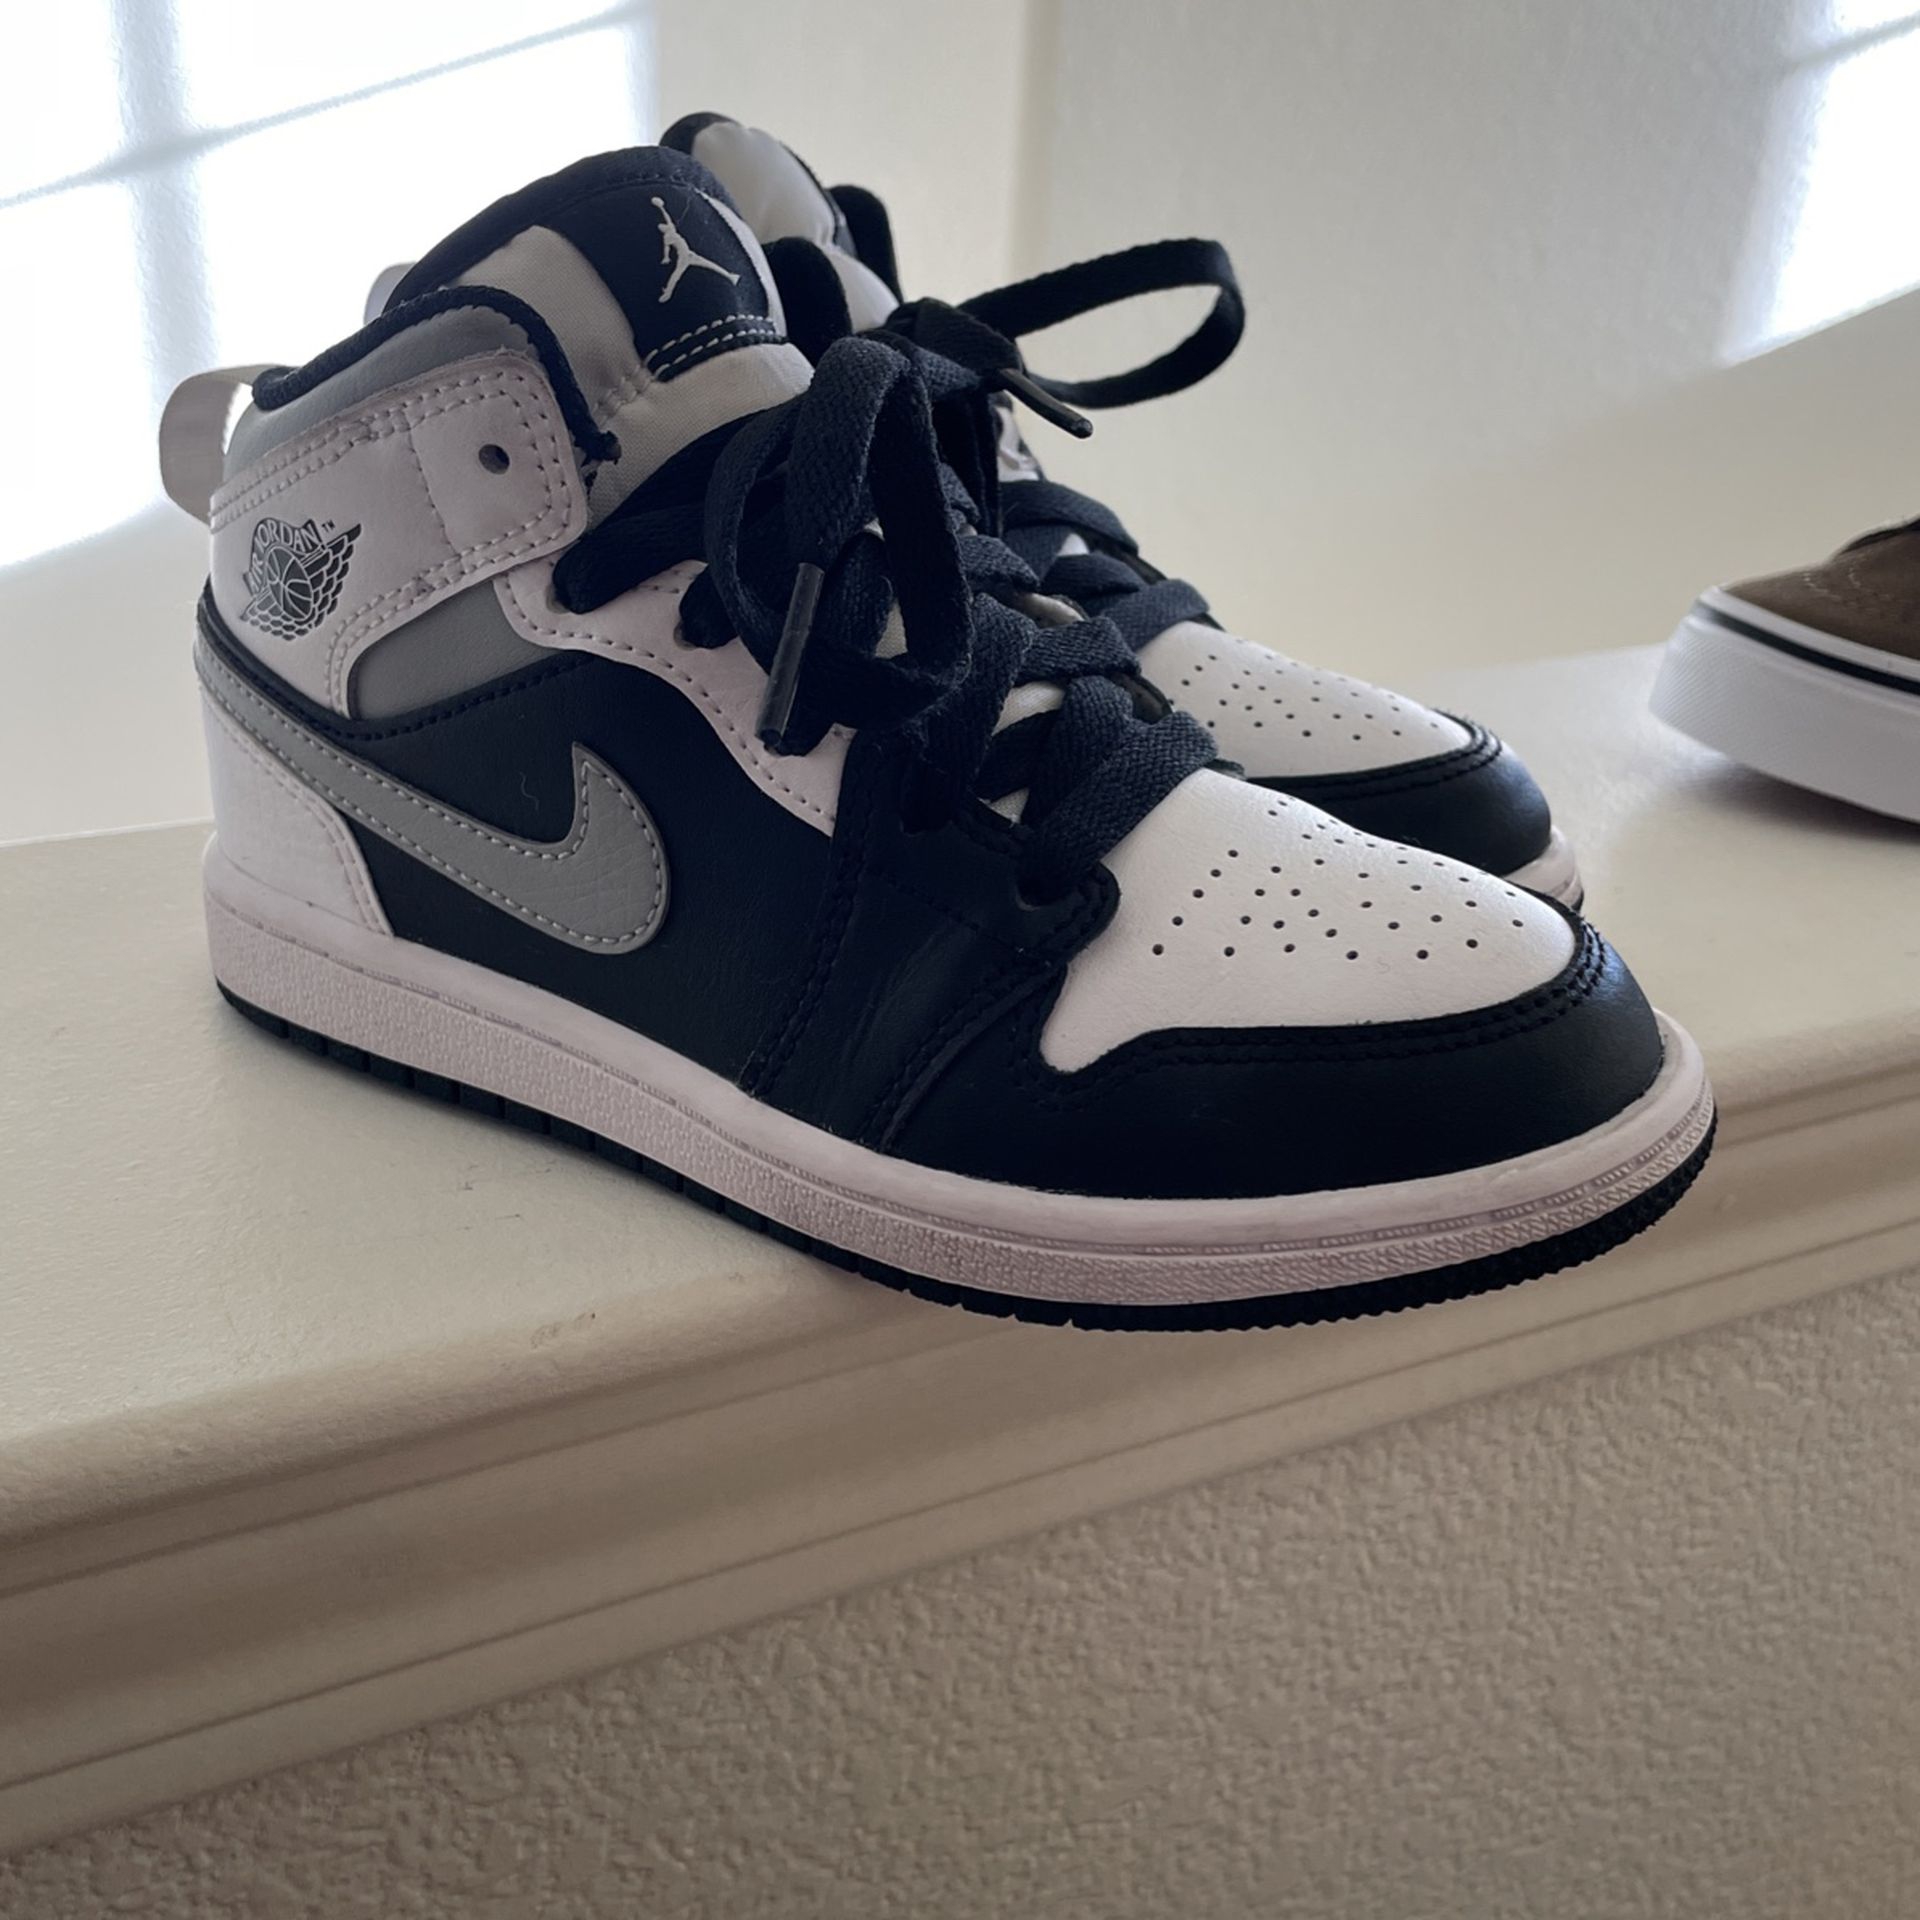 Air Jordan 1  Size 13c - Black Grey White 